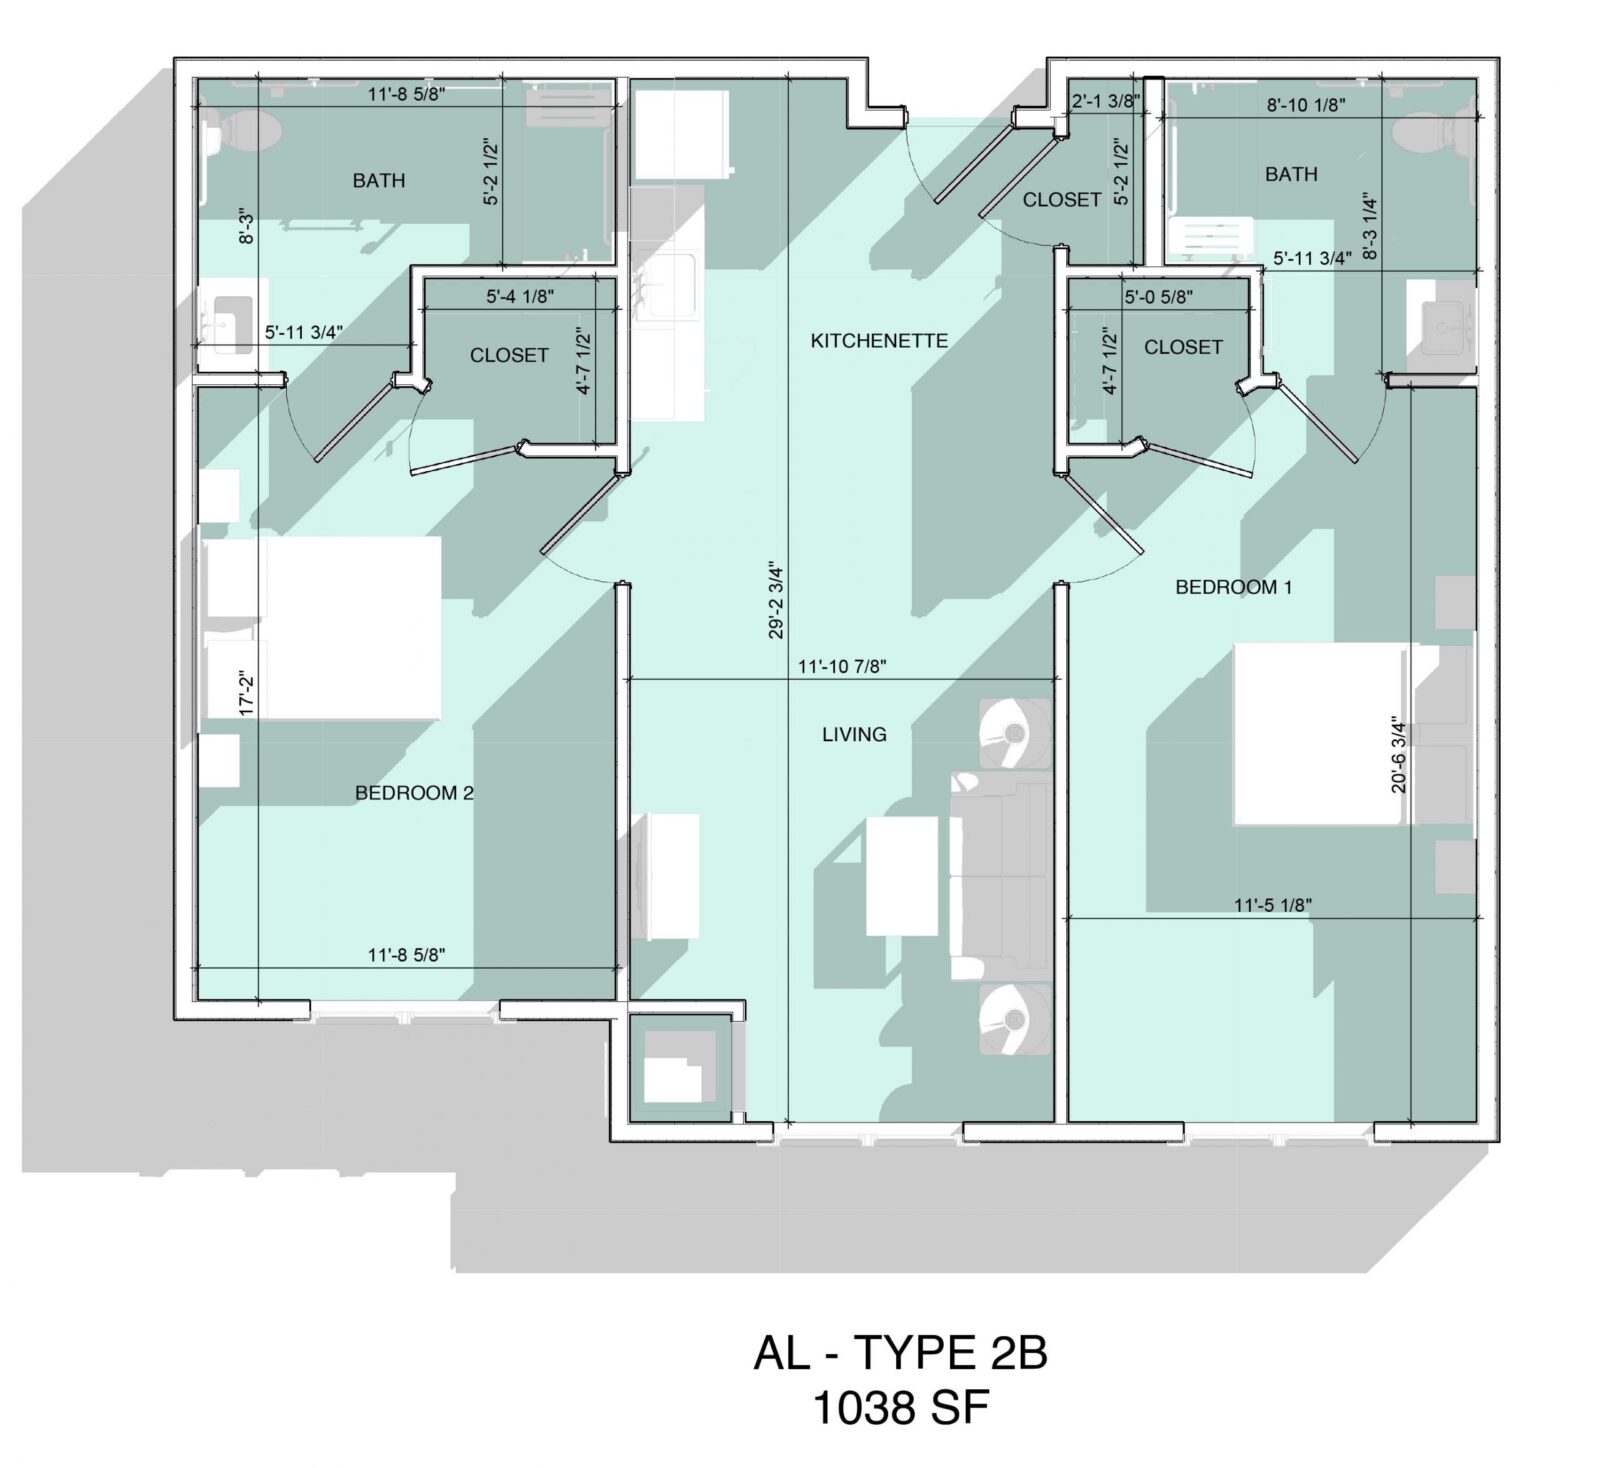 Floor Plan - AL 2B